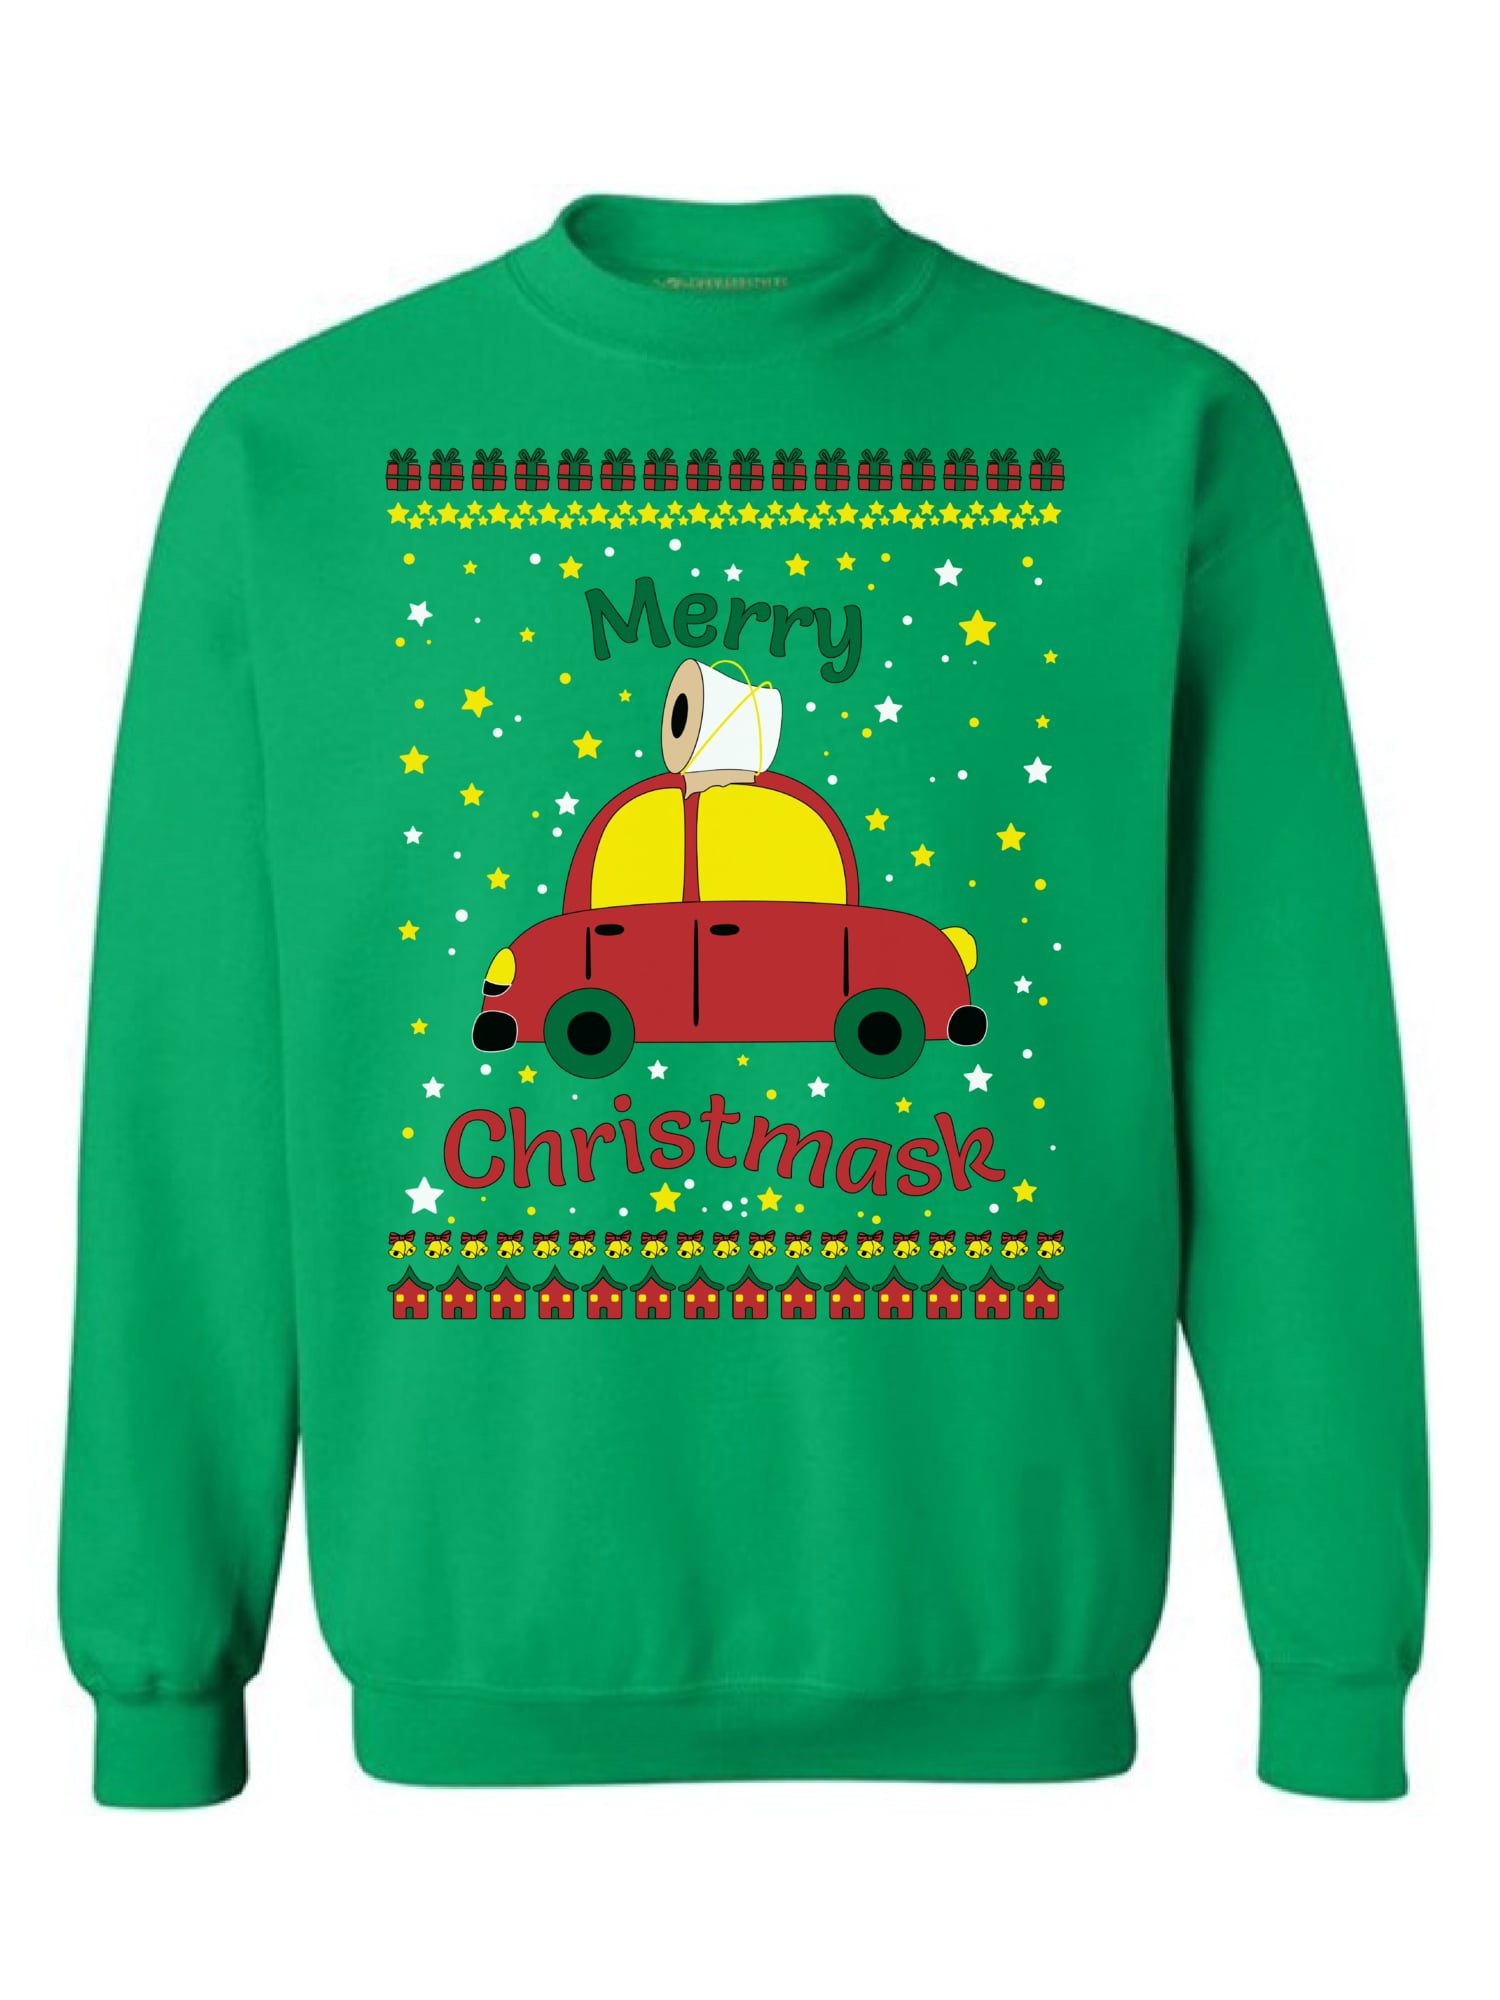 Hoodie Sweatshirt Full Size Colors Oversized Shirts Couple Baby Water Reflection t-shirt Christmas Gift Shirt Birthday Holiday Gift